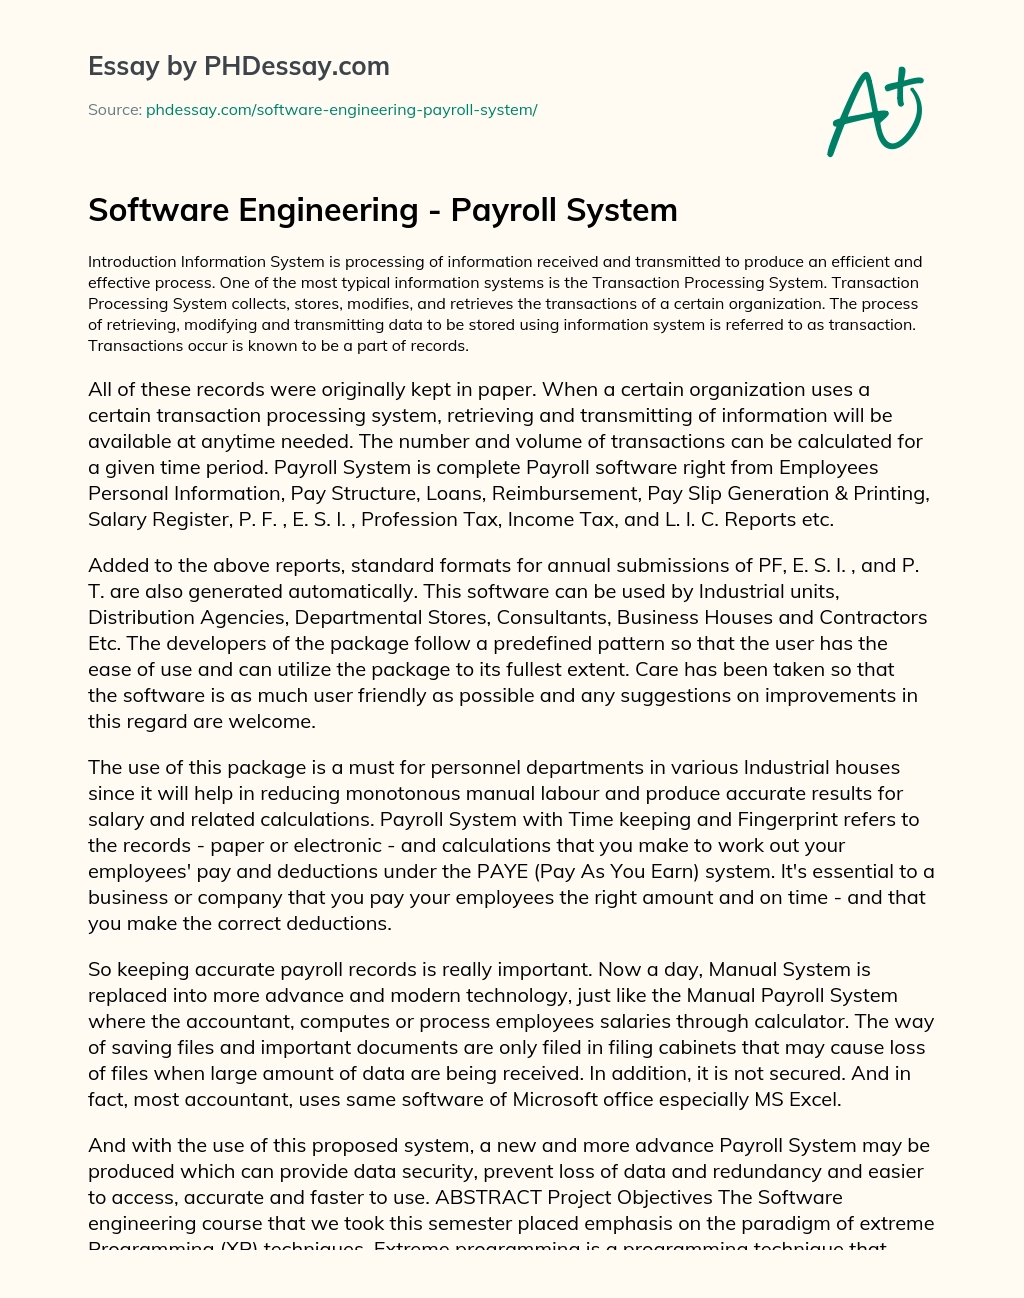 Software Engineering – Payroll System essay